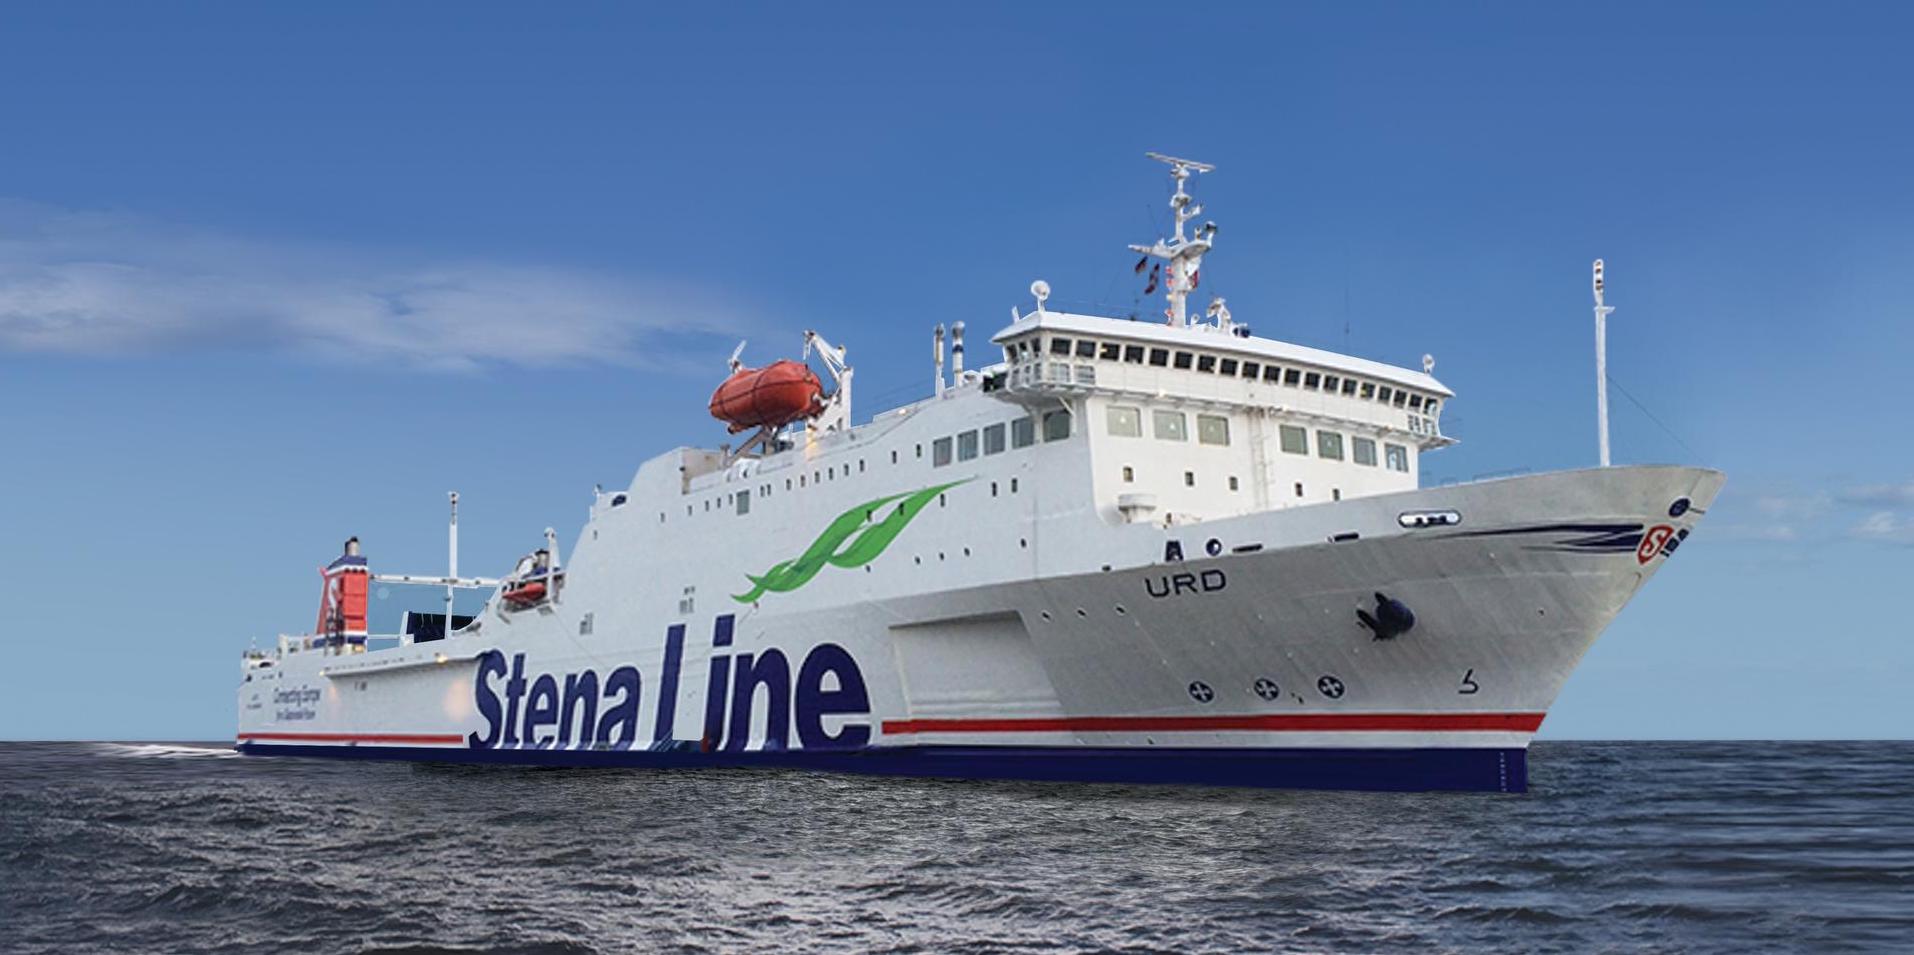 Фотография Stena Line в Urd судна